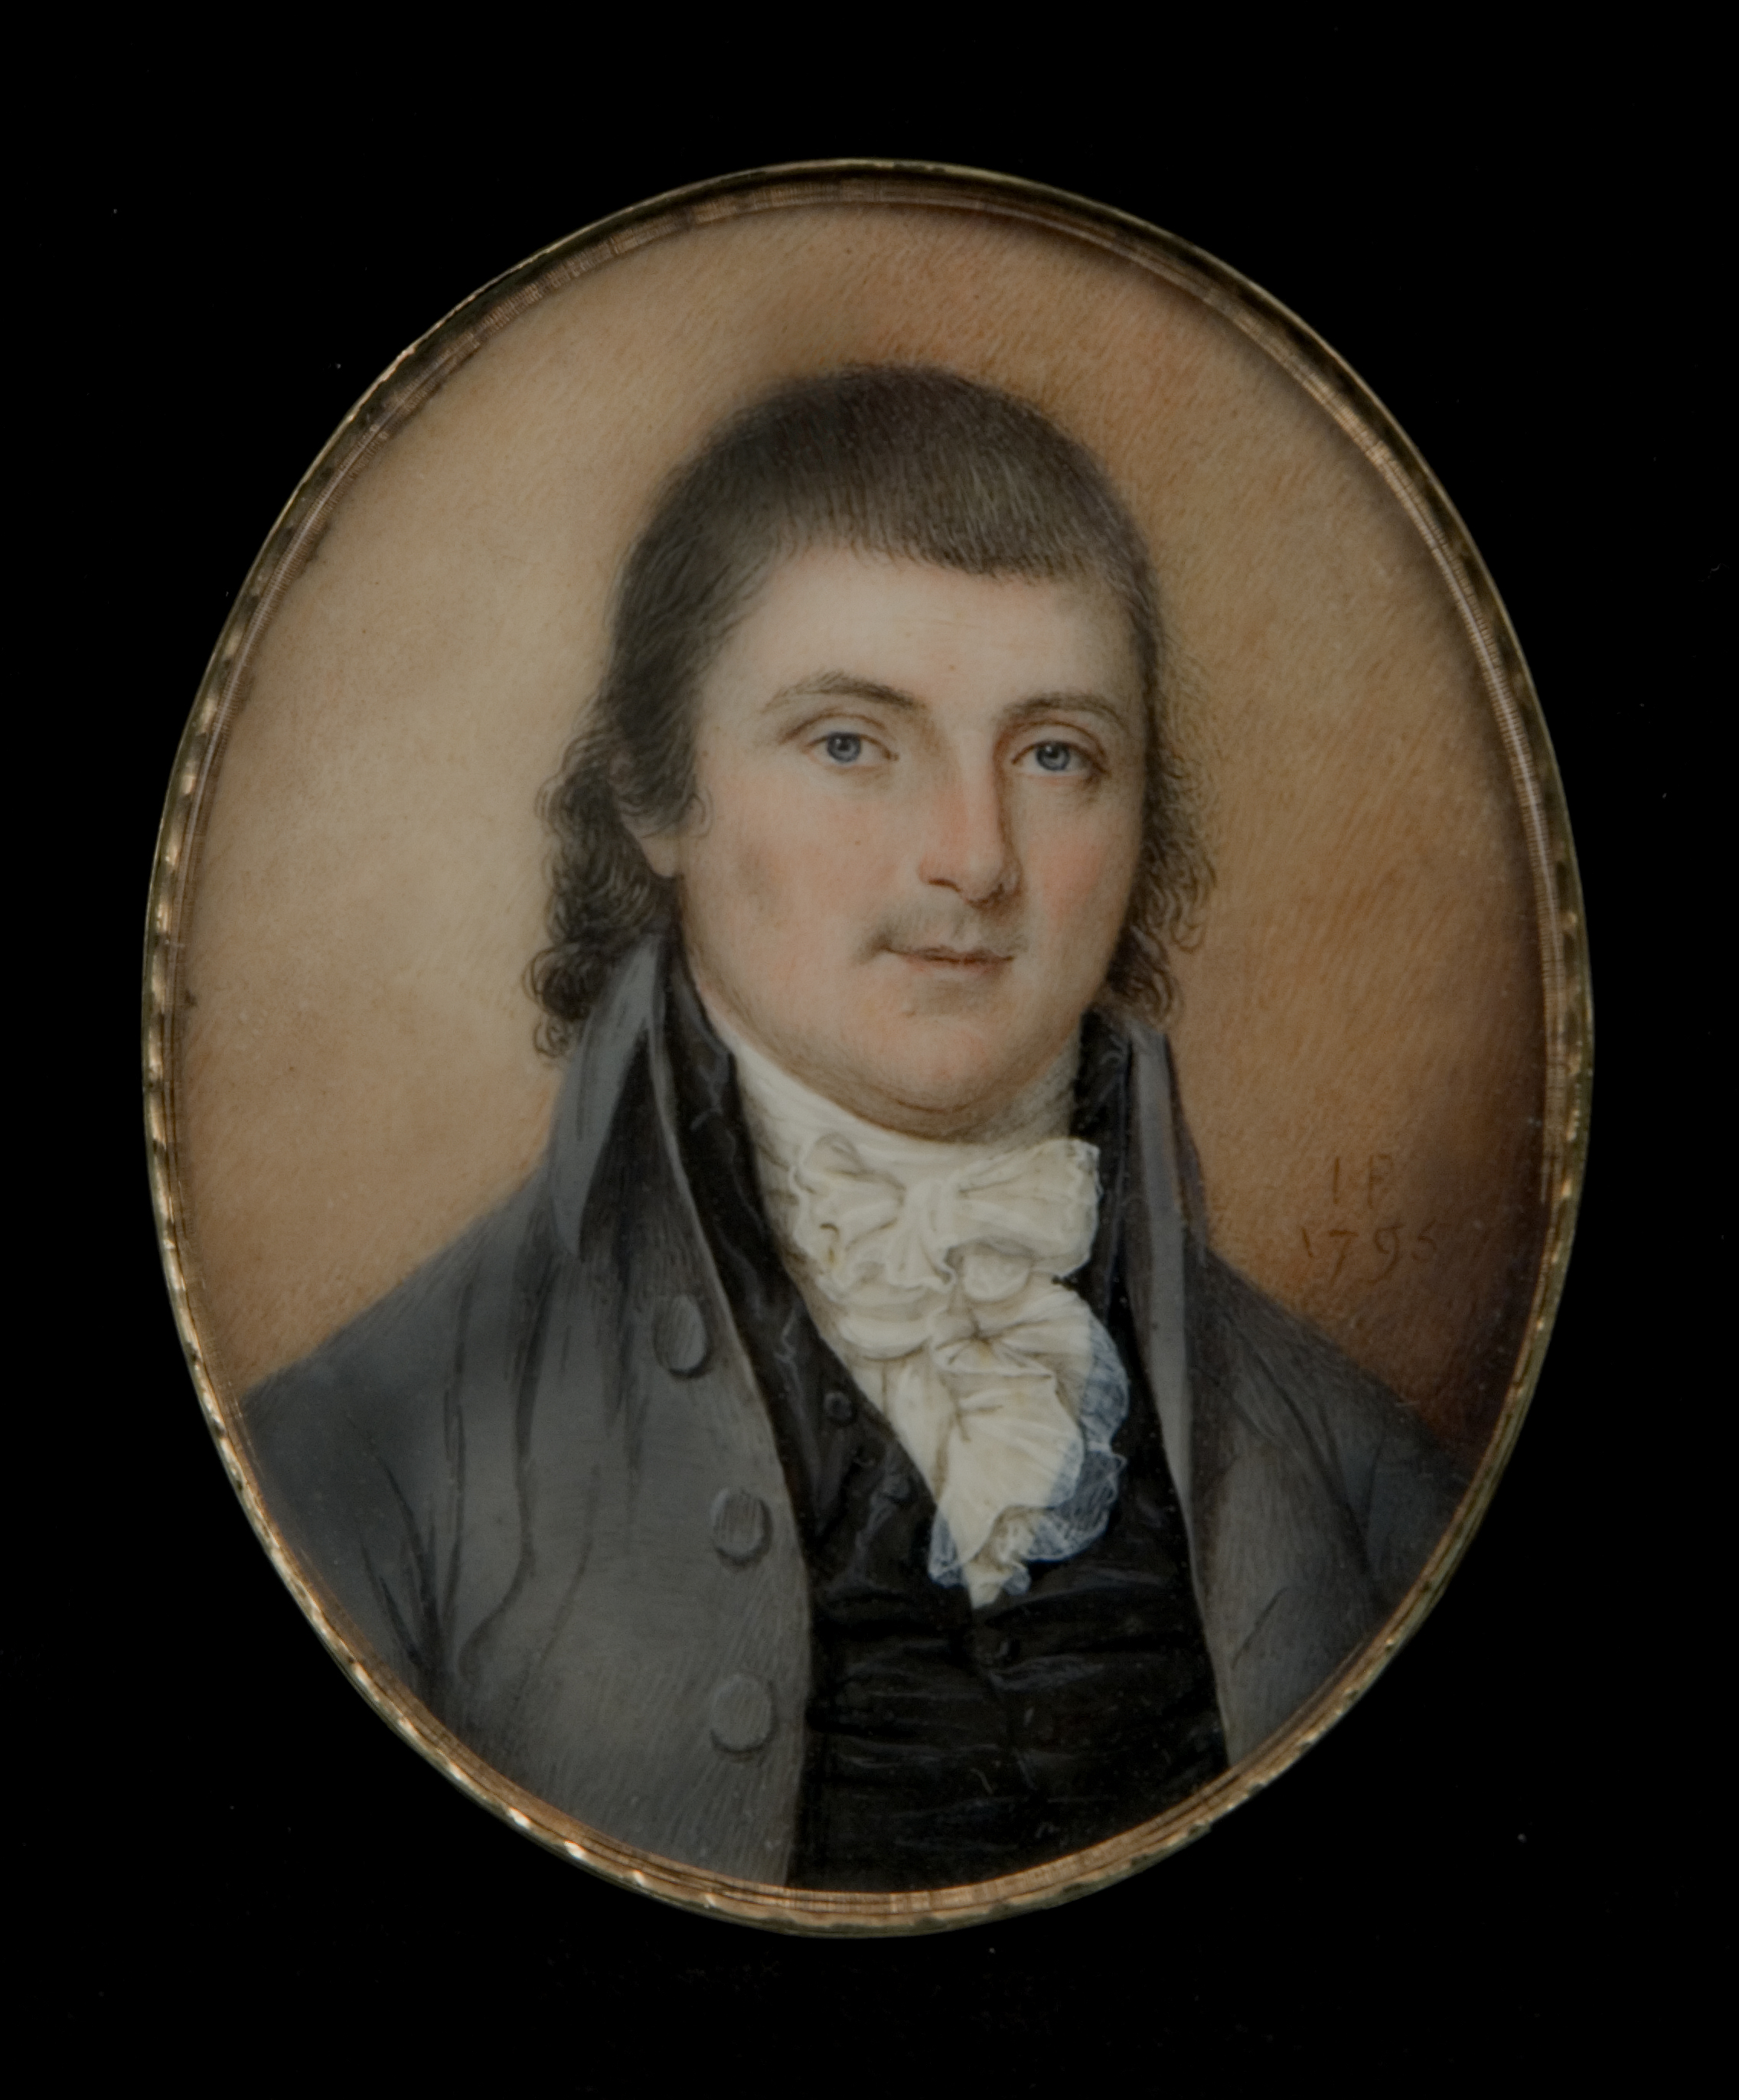 Thomas Posey portrait miniature by James Peale, 1795